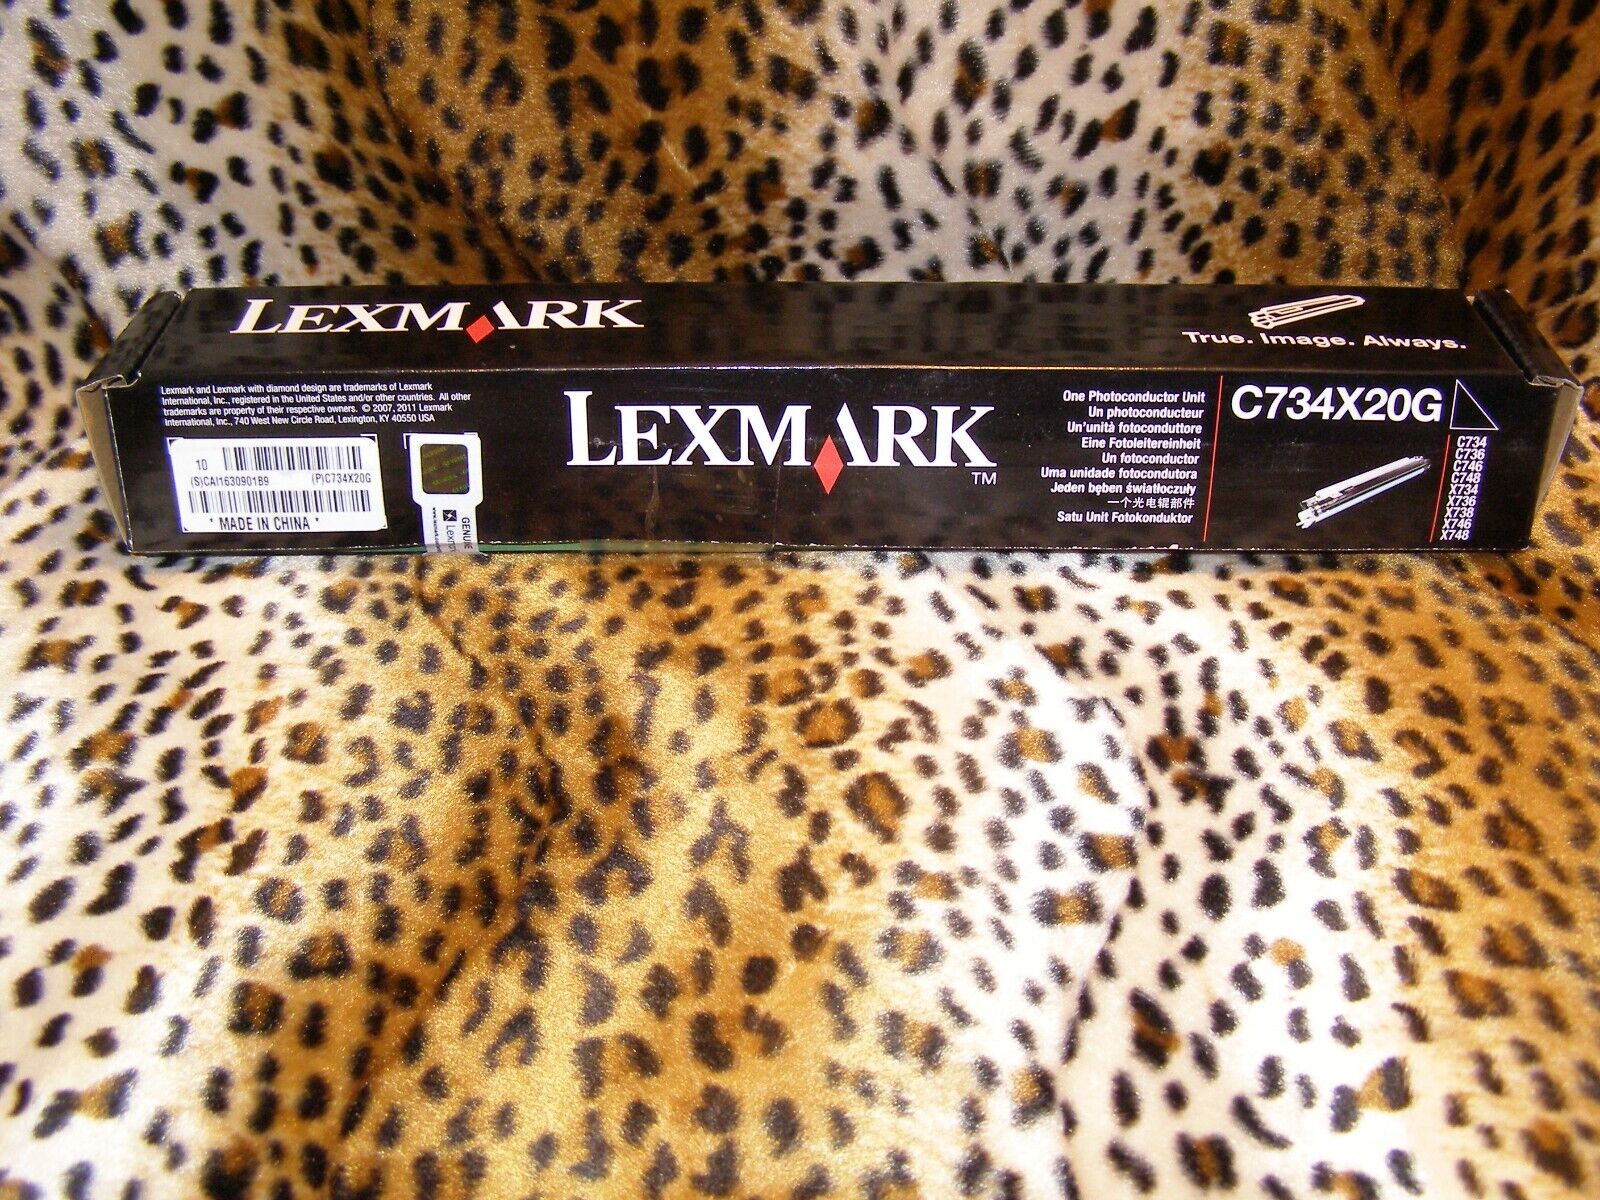 LEXMARK C734X20G PHOTOCONDUCTOR UNIT